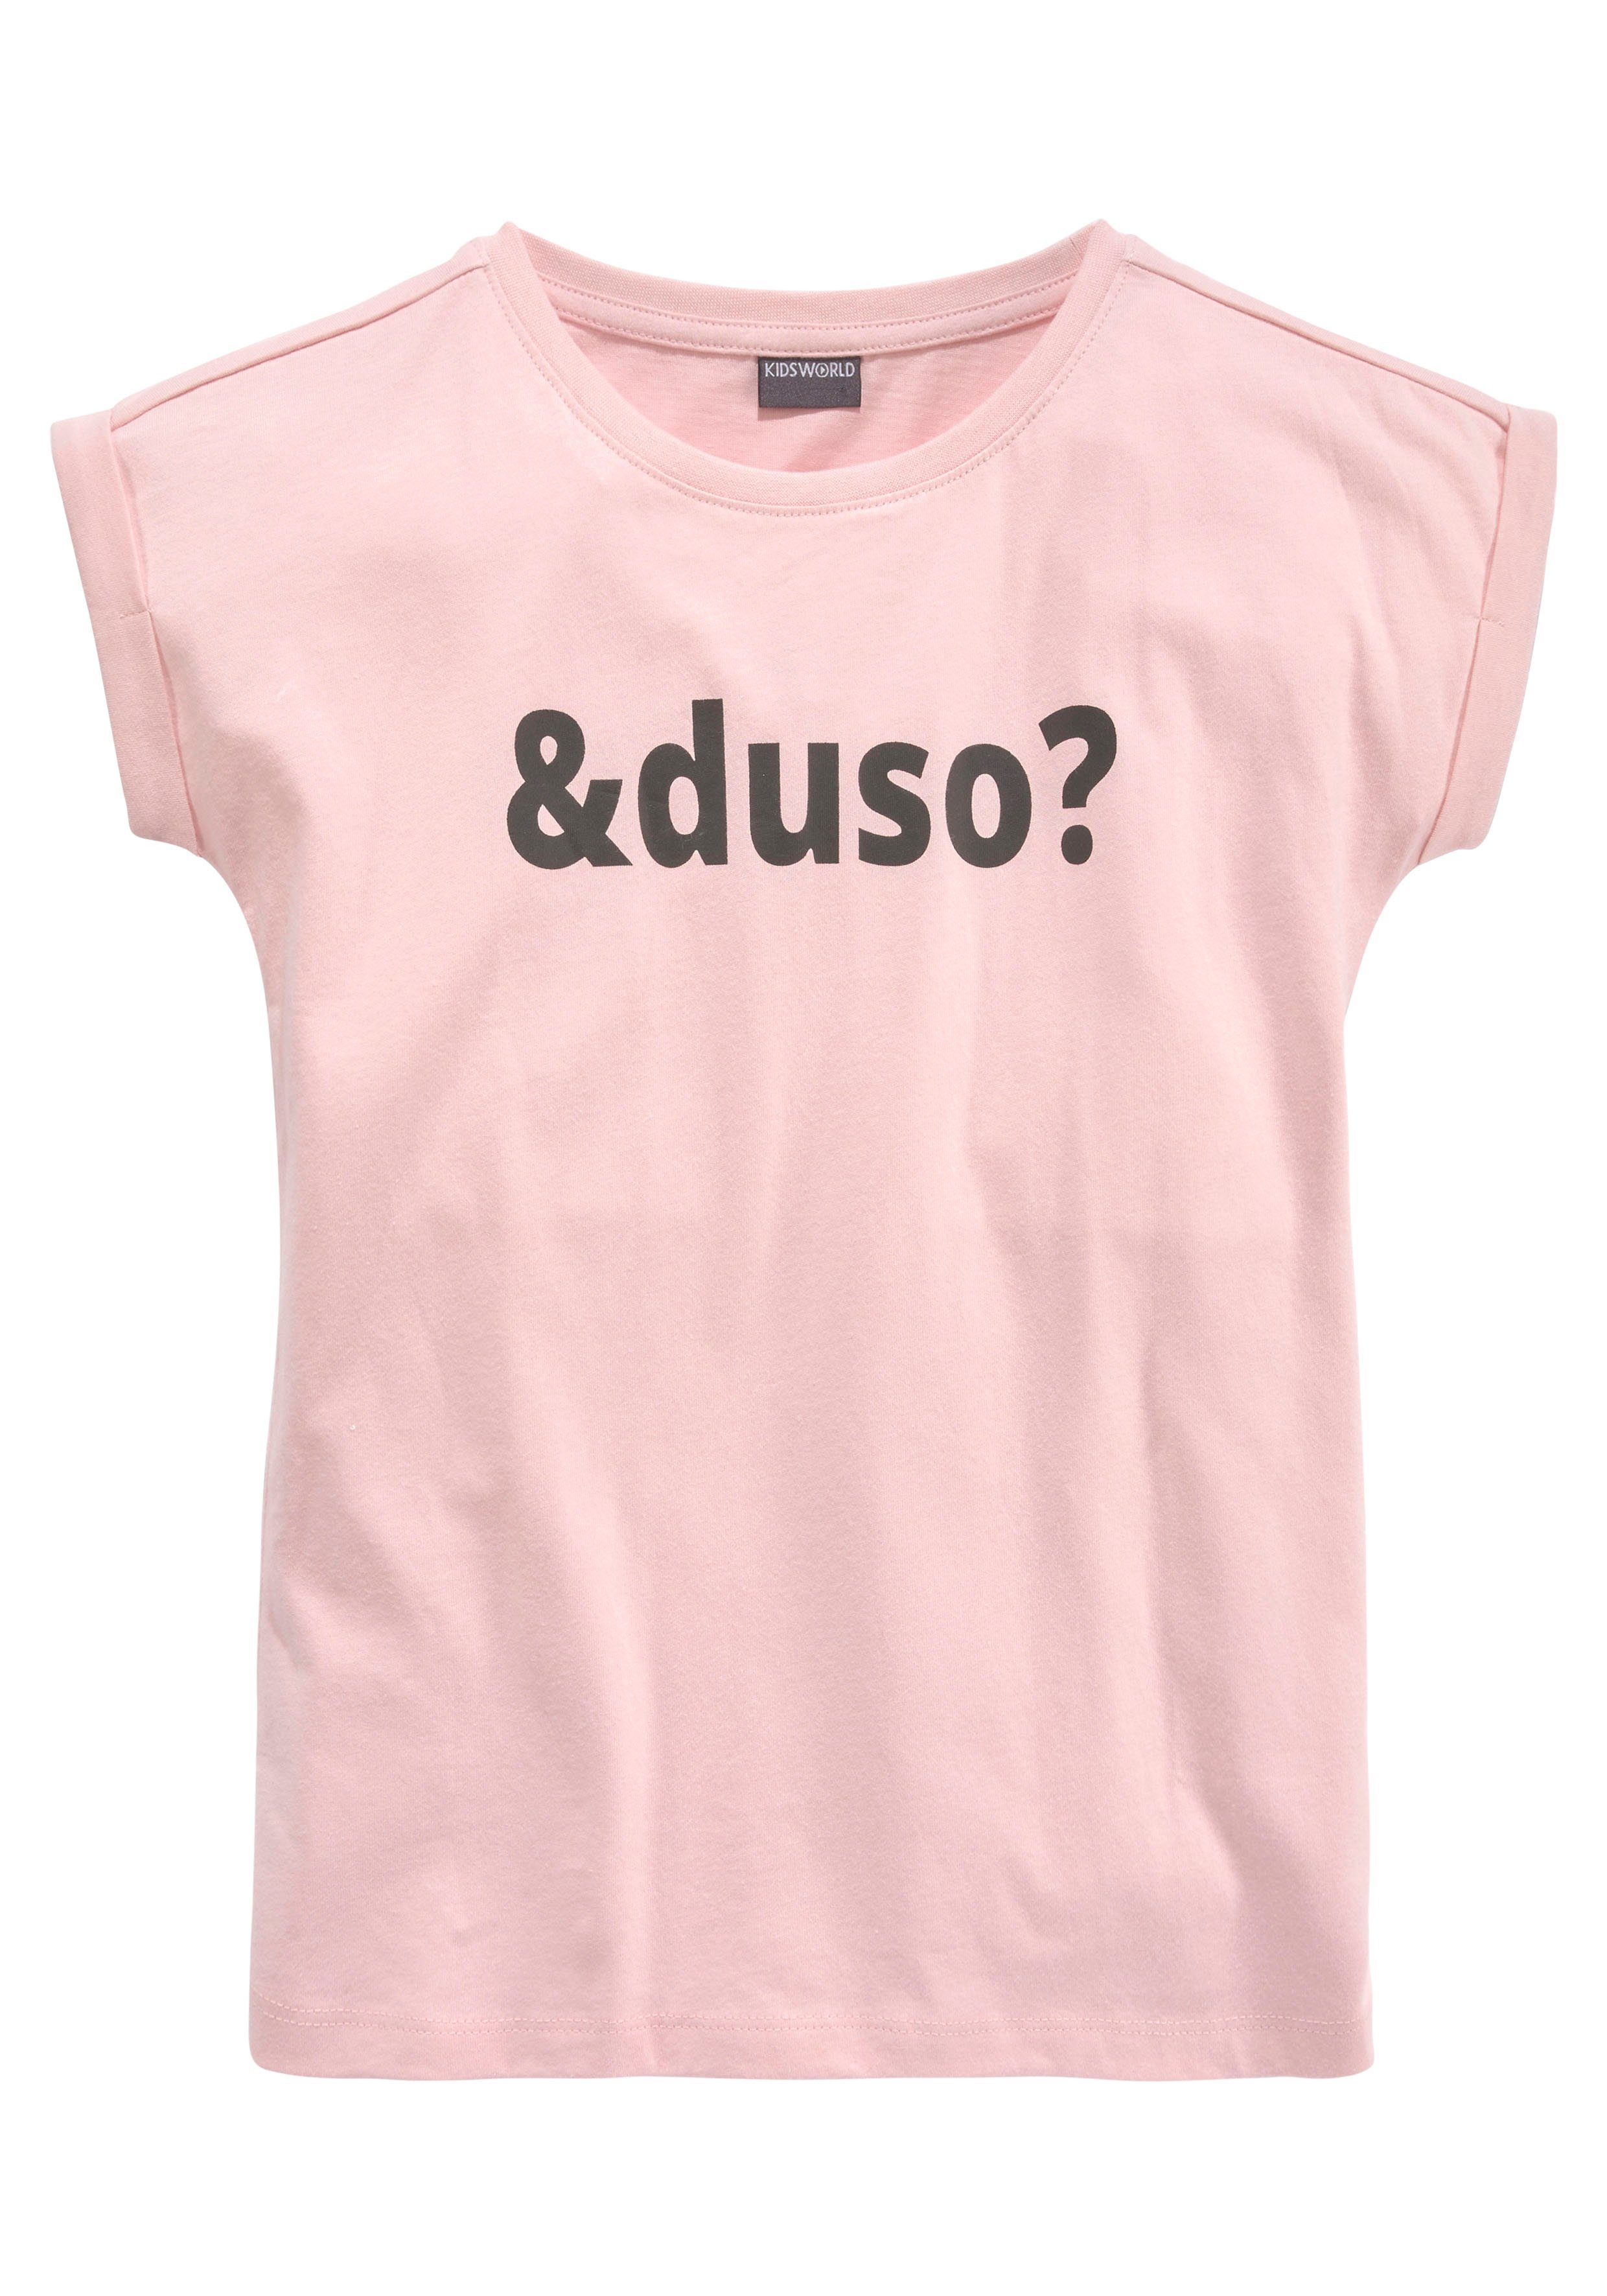 Passform in T-Shirt bequemer &duso? KIDSWORLD